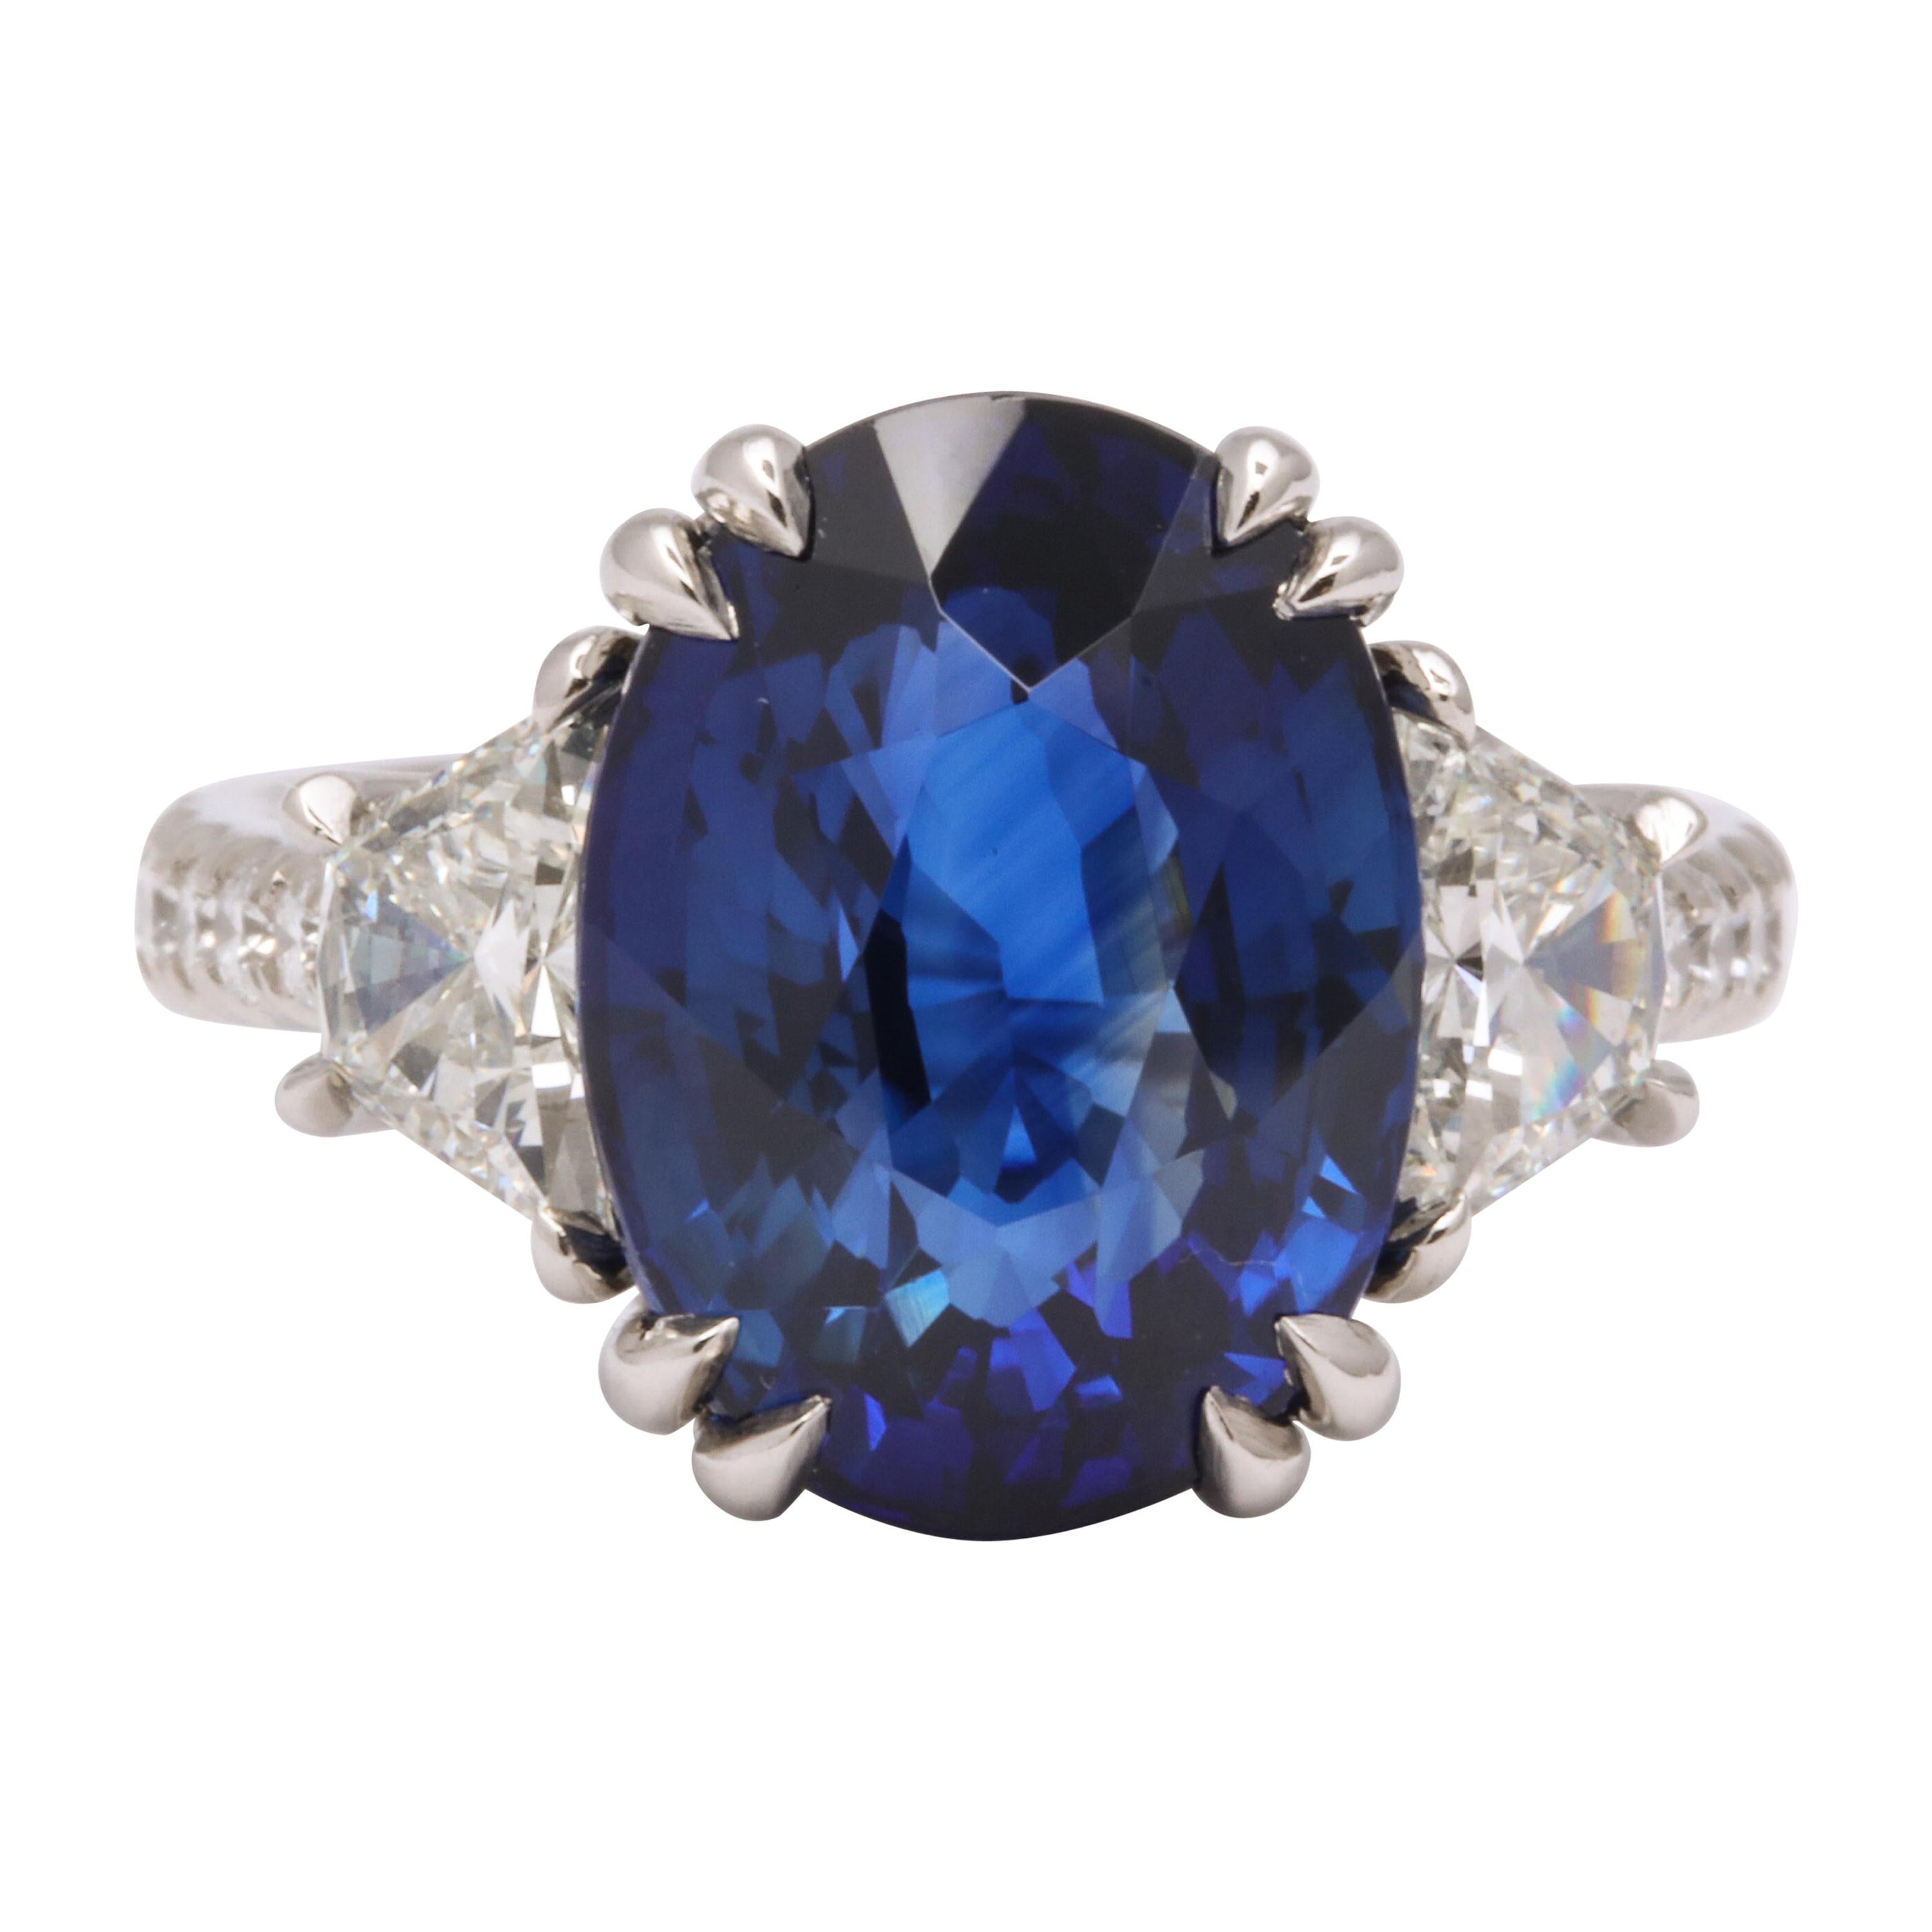 8 Carat Vivid Blue Sapphire and Diamond Ring